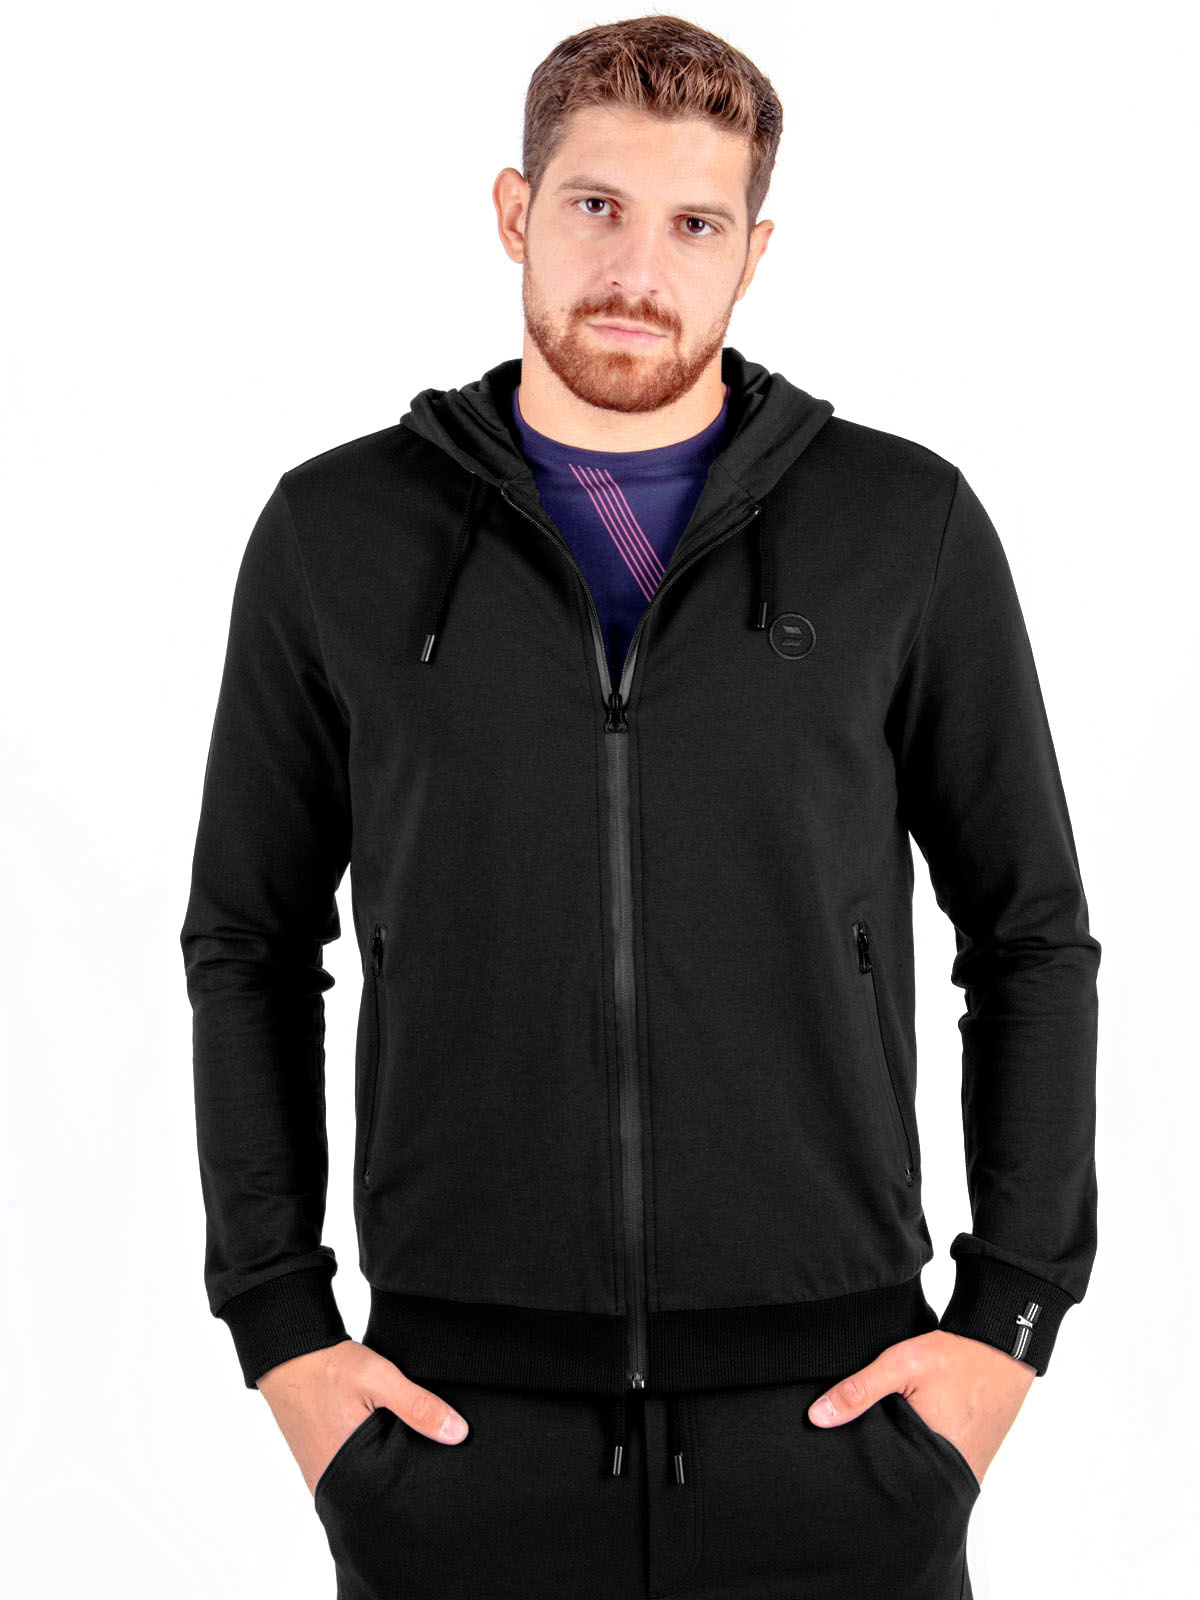 Sweatshirt in black with hood - 28097 € 27.56 img2